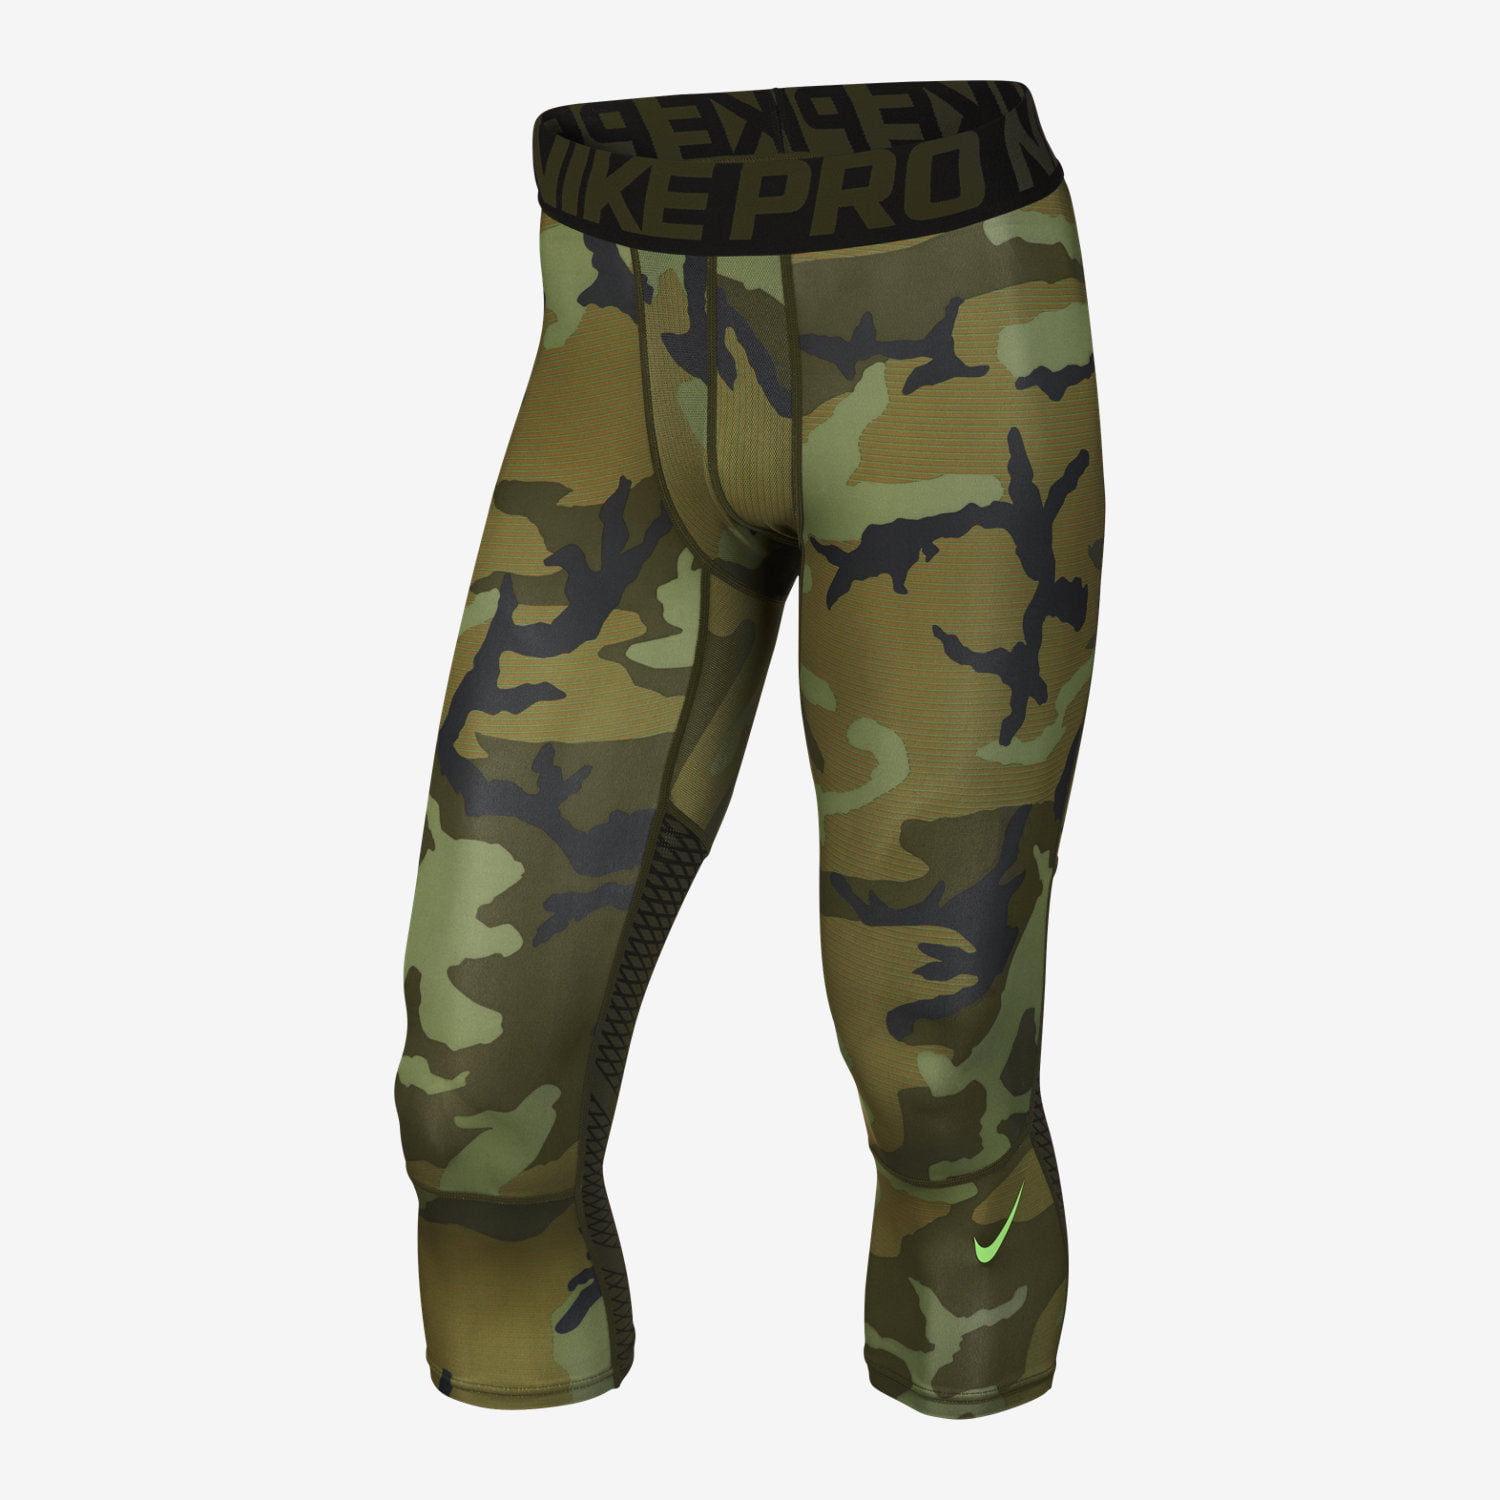 Nike Pro Combat Hypercool Men's 3/4 Camo Compression Tights Pants Size M -